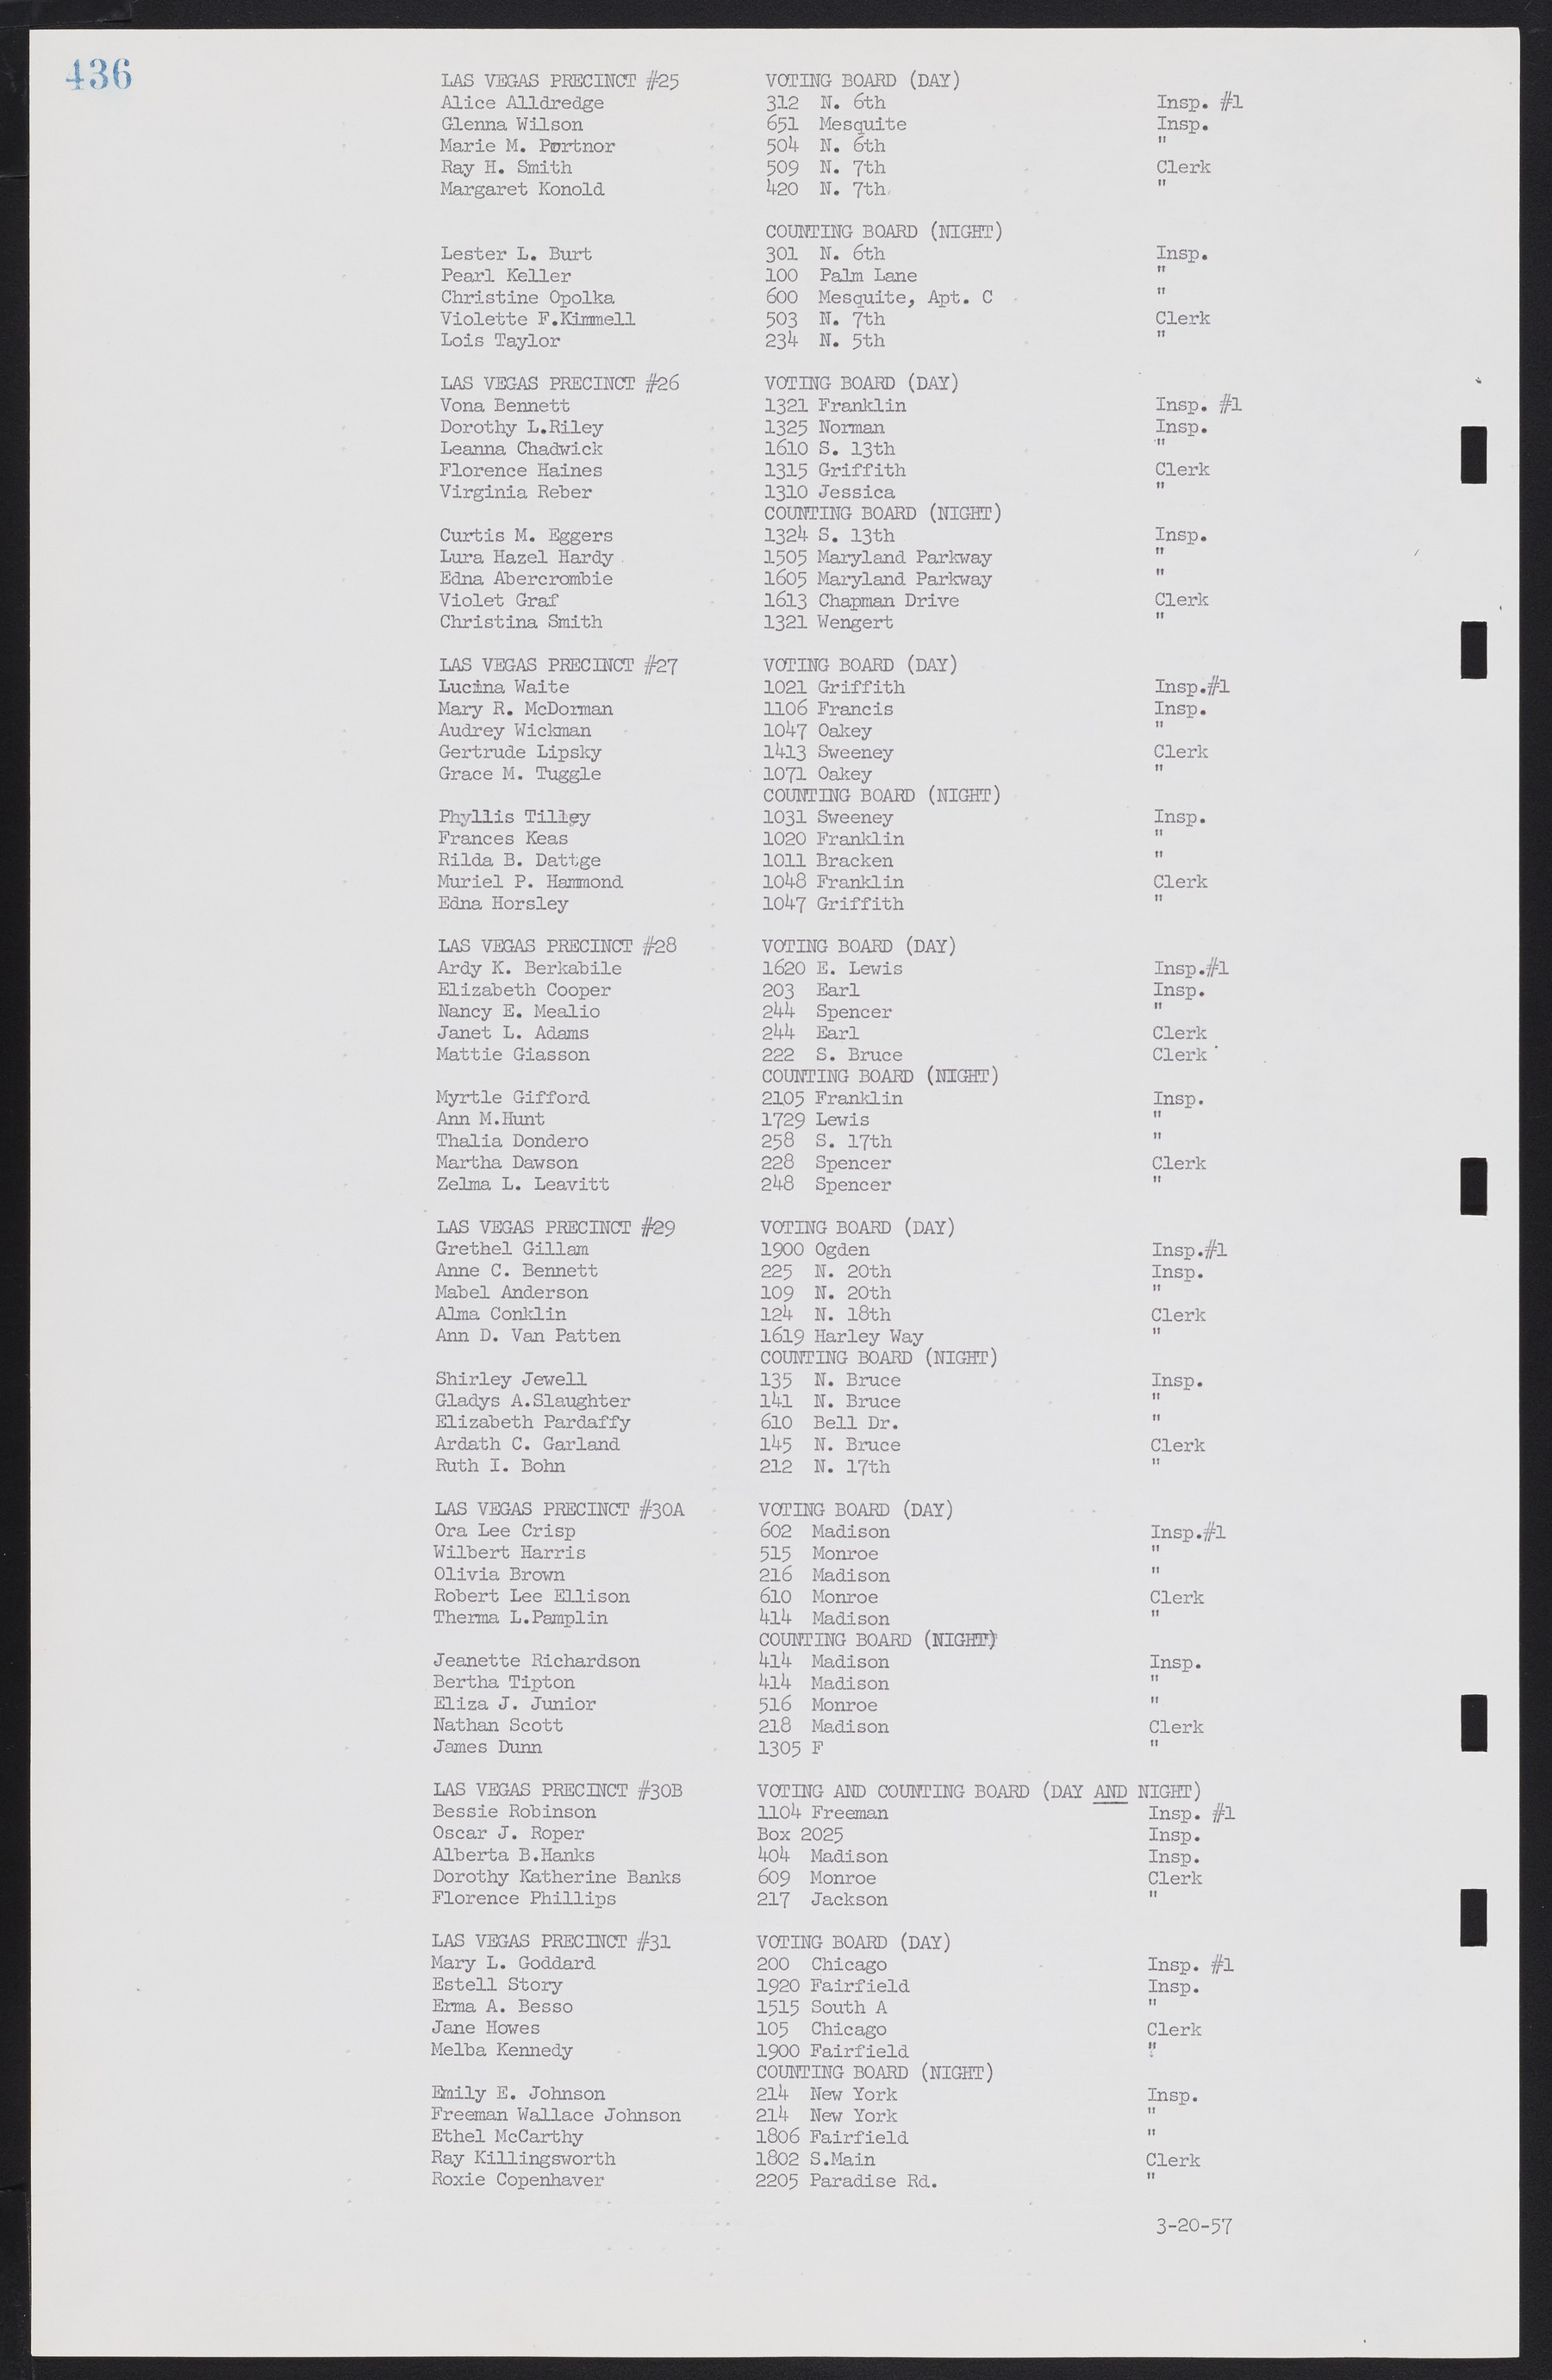 Las Vegas City Commission Minutes, September 21, 1955 to November 20, 1957, lvc000010-456